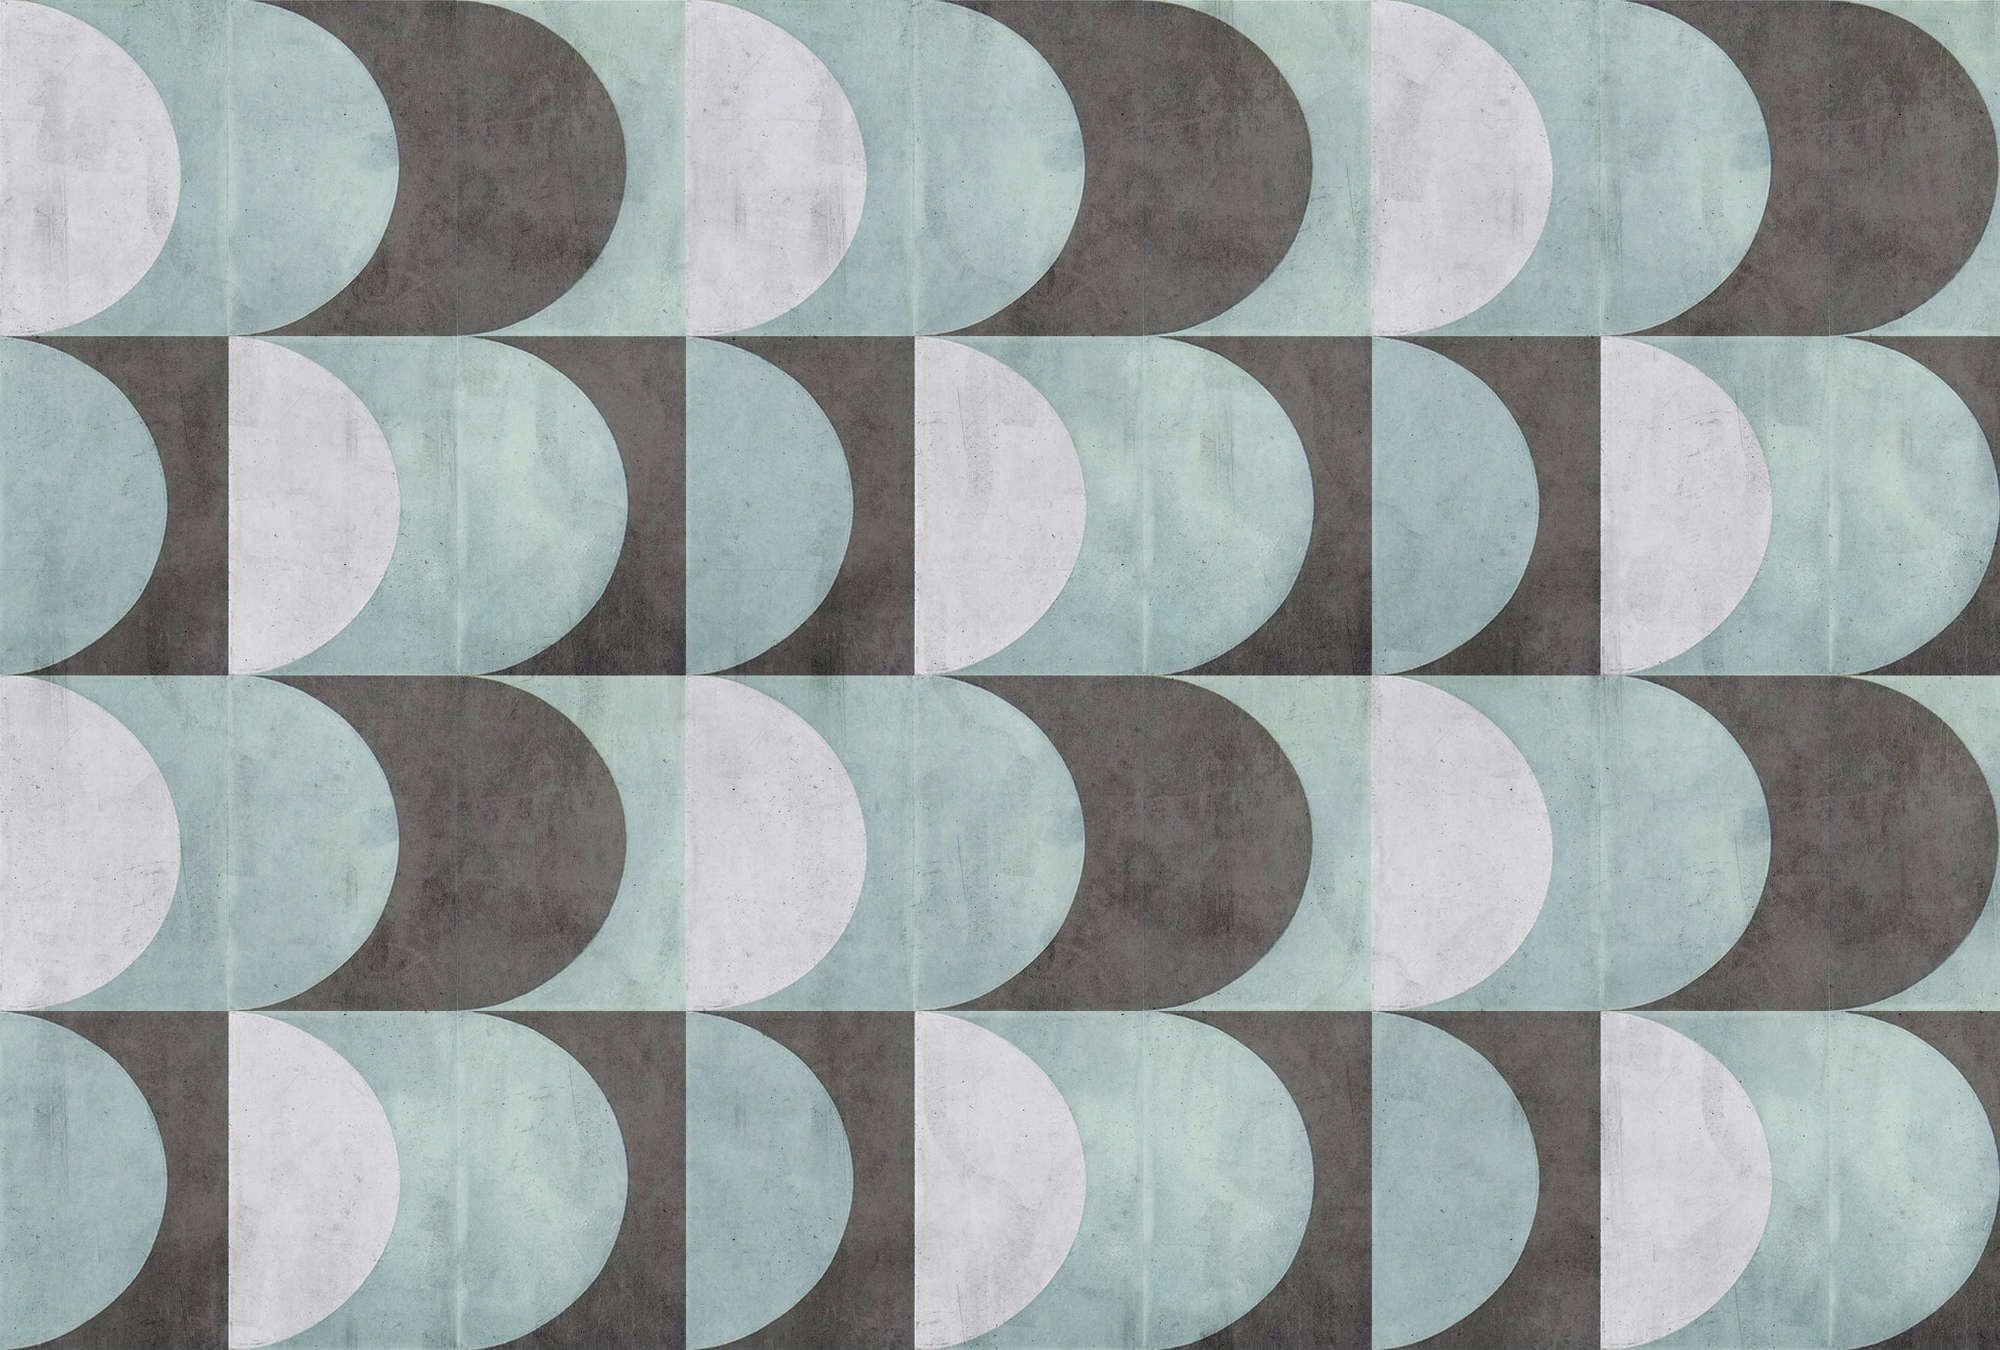             Photo wallpaper »julek 2« - retro pattern in concrete look - mint green, grey | matt, smooth non-woven
        